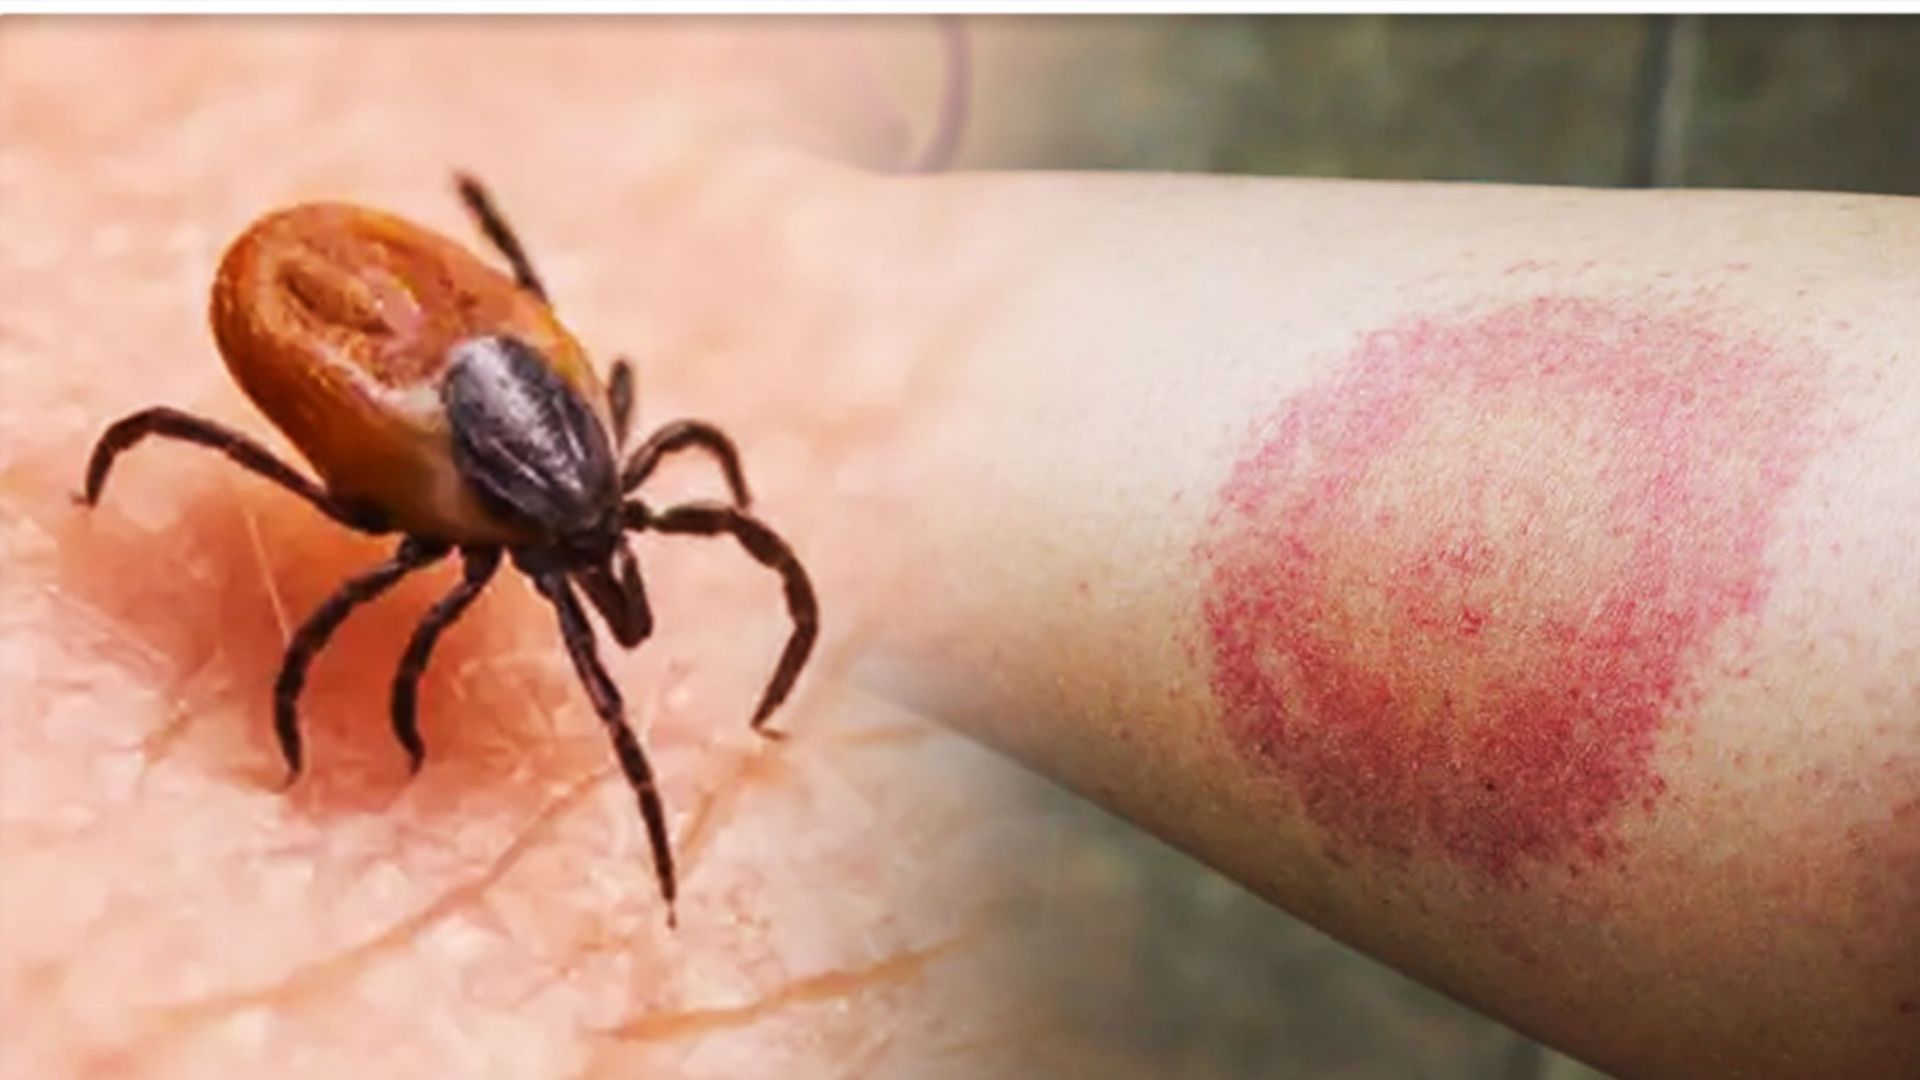 Lyme disease reported in Kerala’s Ernakulam